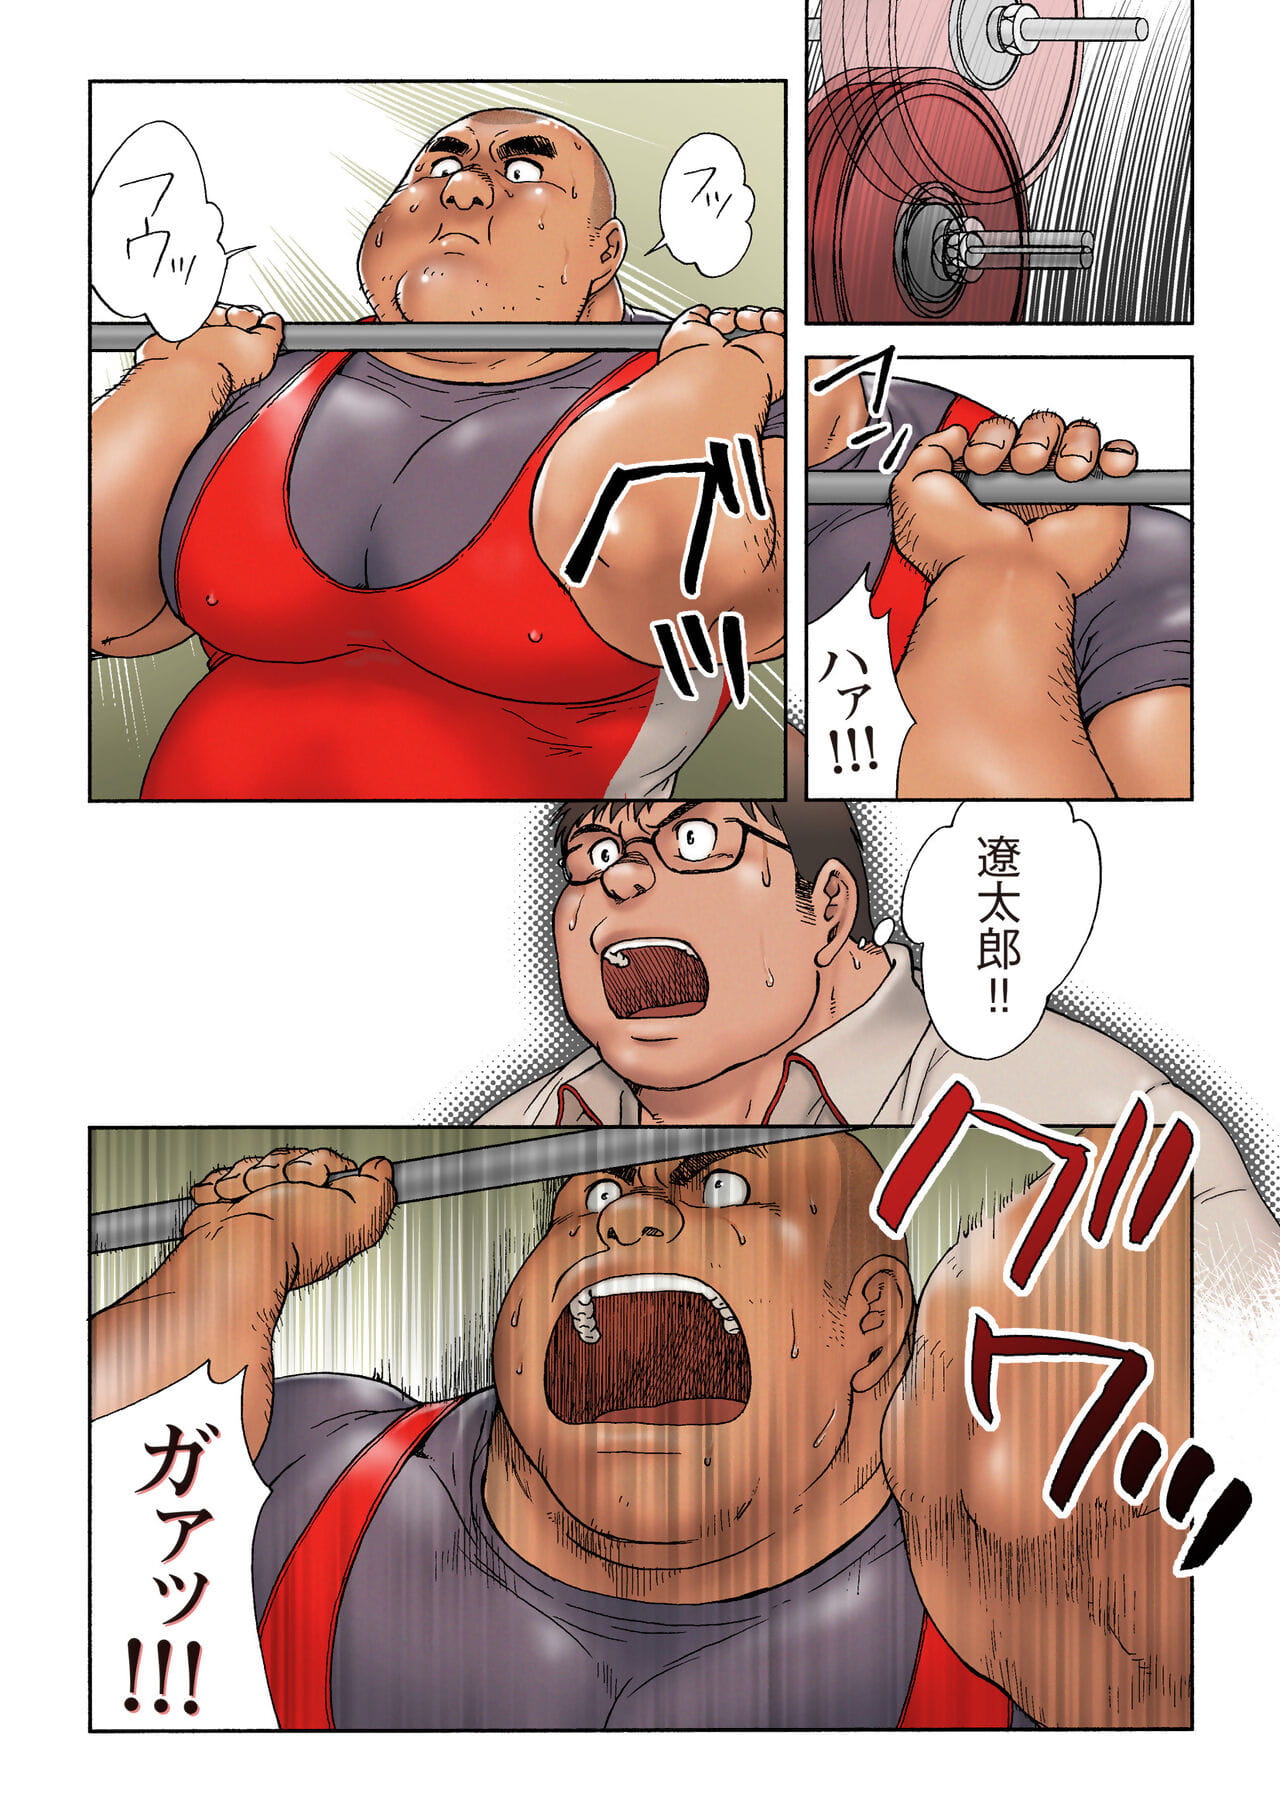 Danshi Koukousei Weightlifter Taikai-go no Hotel de no Aoi Yoru page 1